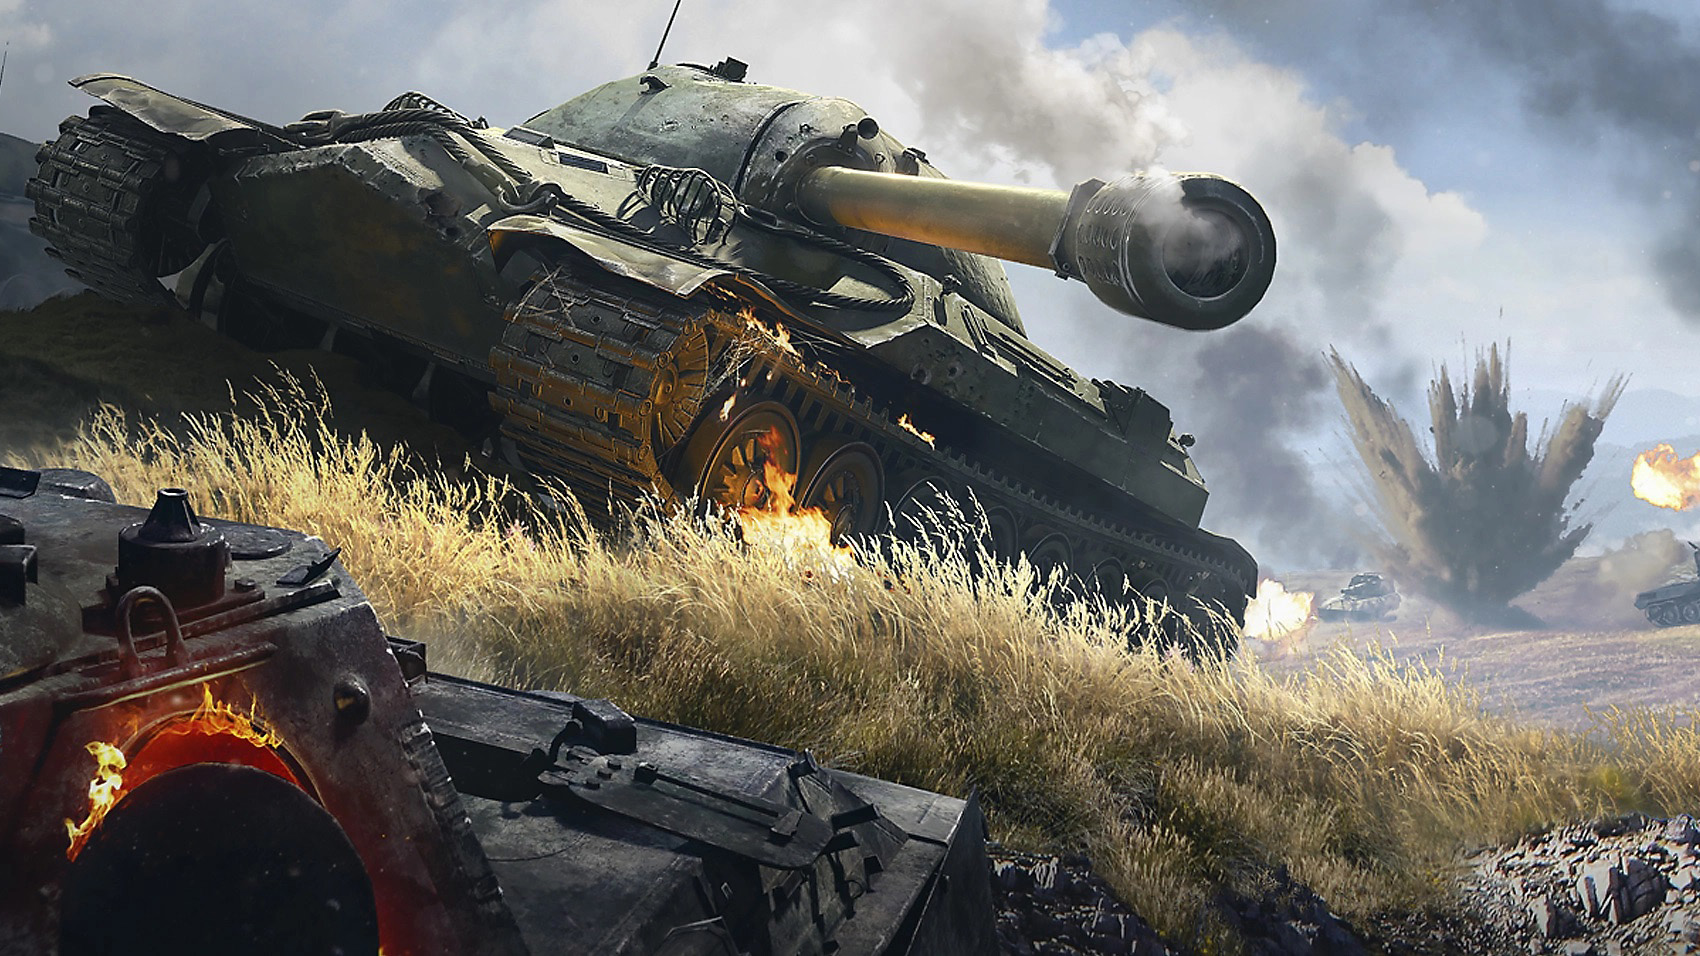 Næb Tænke Markér World of Tanks on PS4 - Warfare History Network